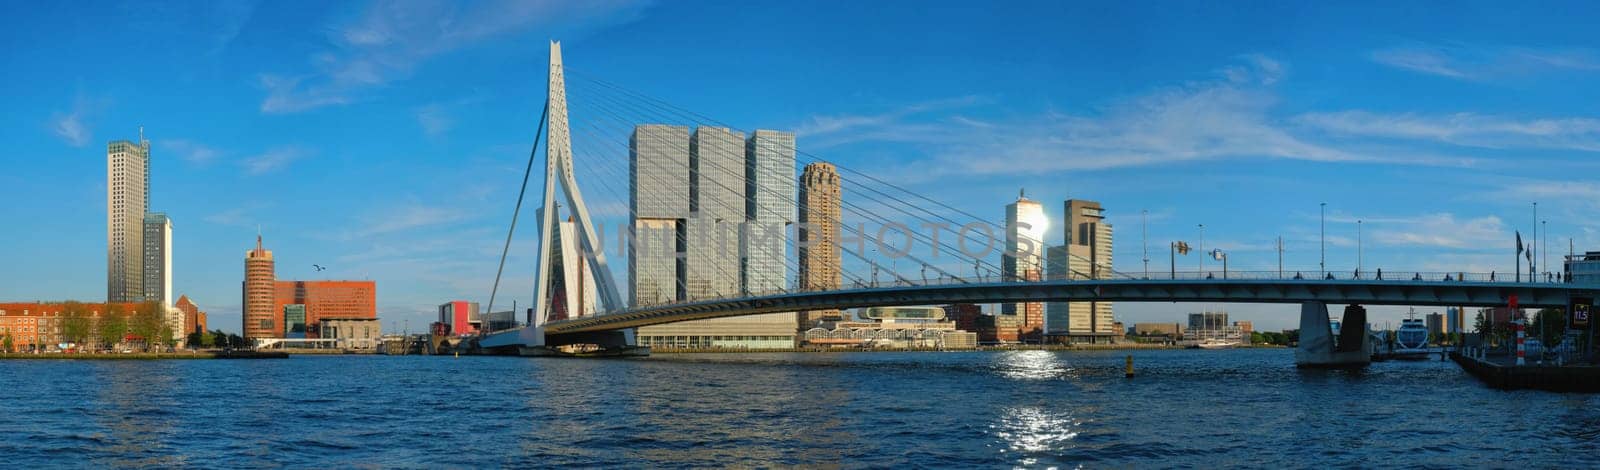 Rotterdam cityscape , Netherlands by dimol